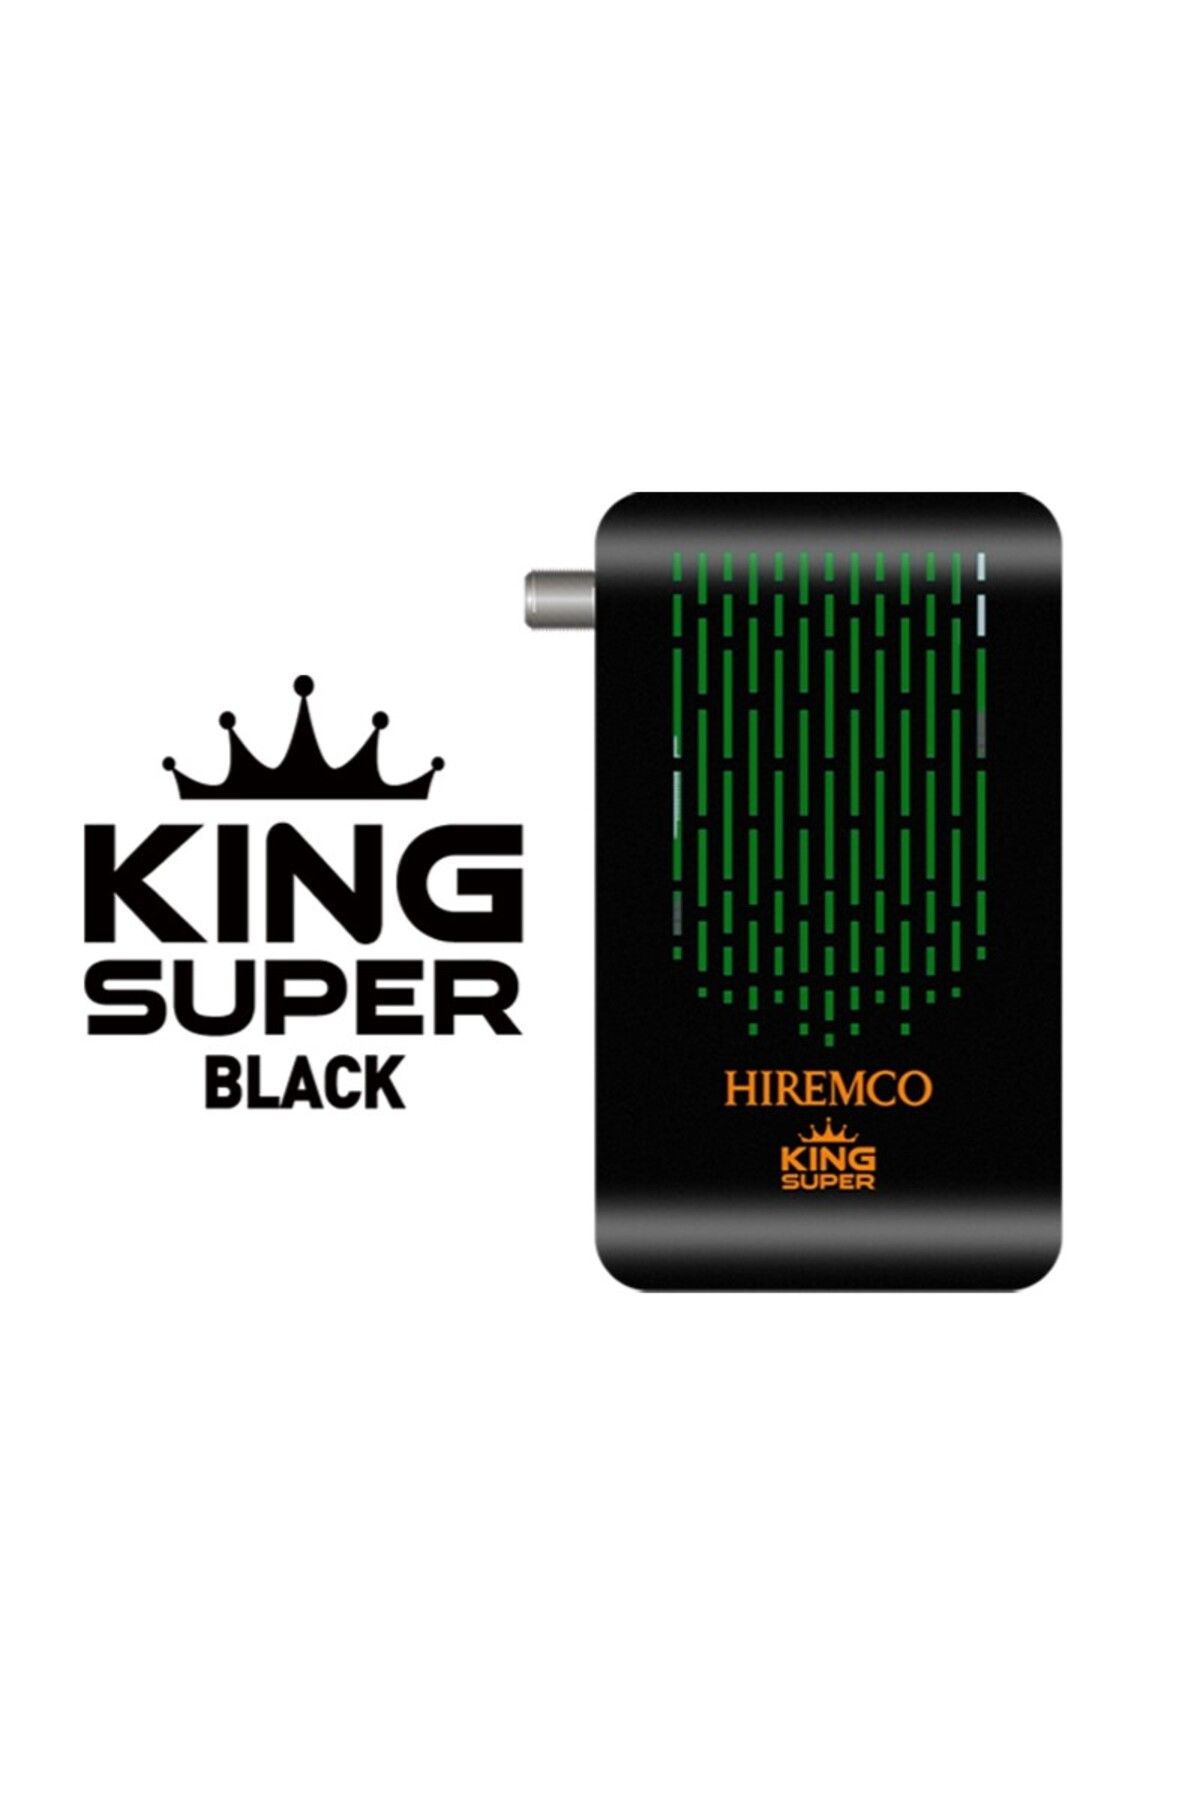 Hiremco Süper King HD Black Uydu Alıcısı